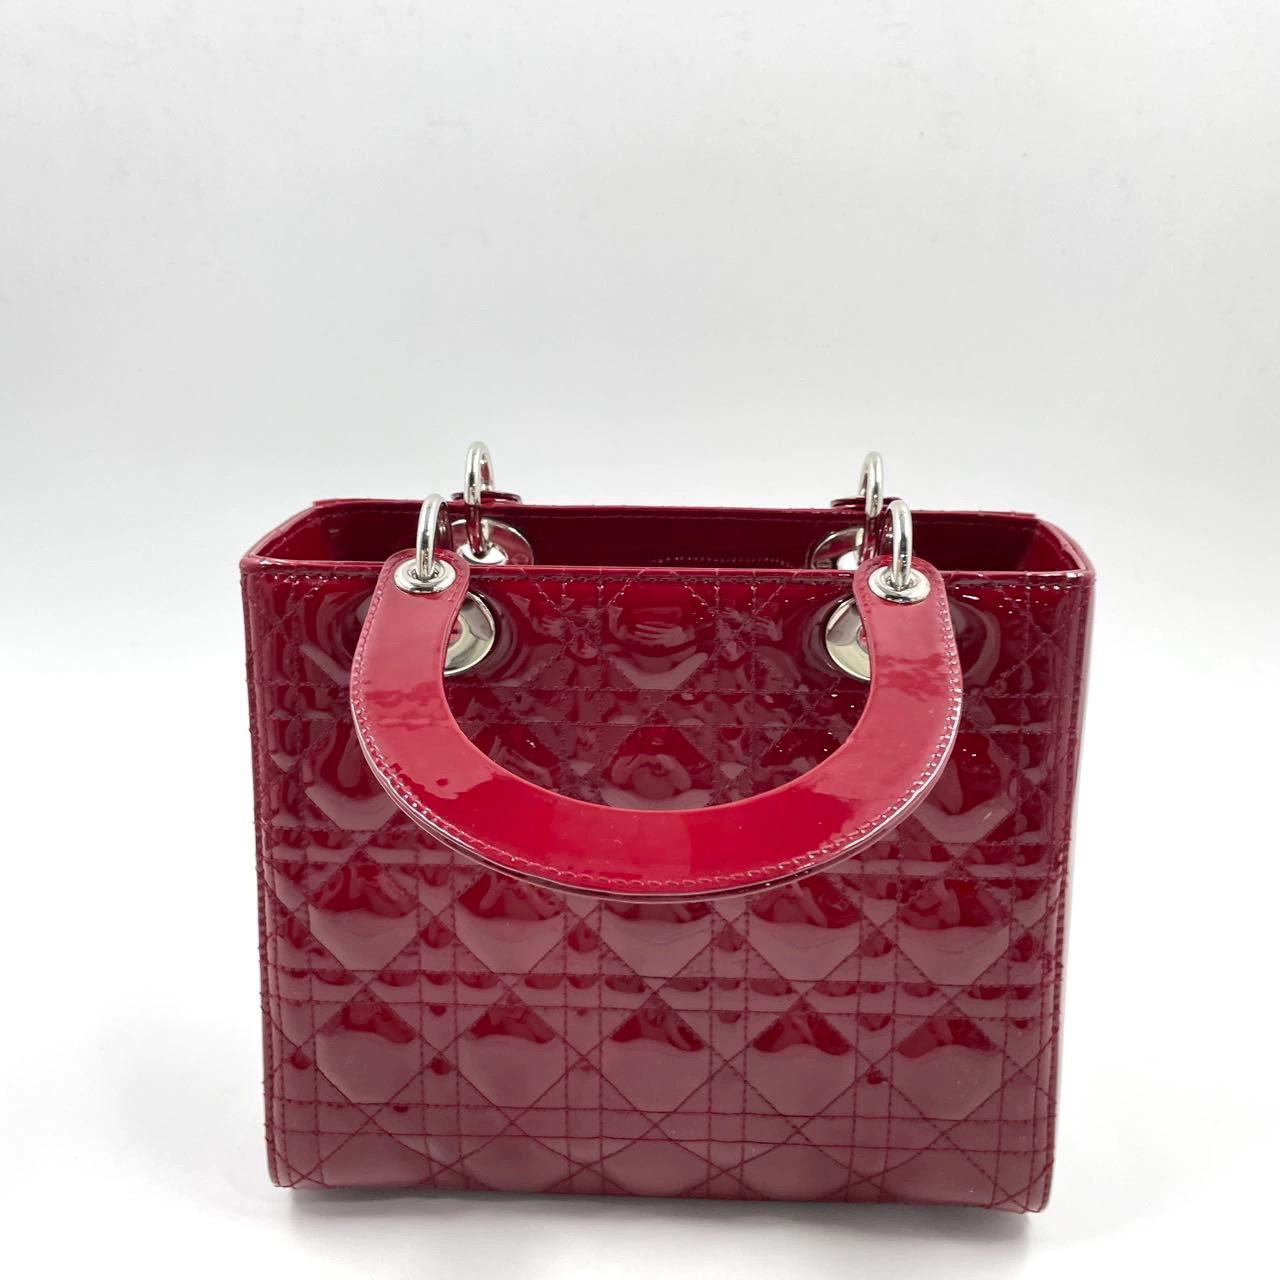 Lady Dior 2017 Medium Burgundy Patent Leather Handbag Adjustable Strap For Sale 1